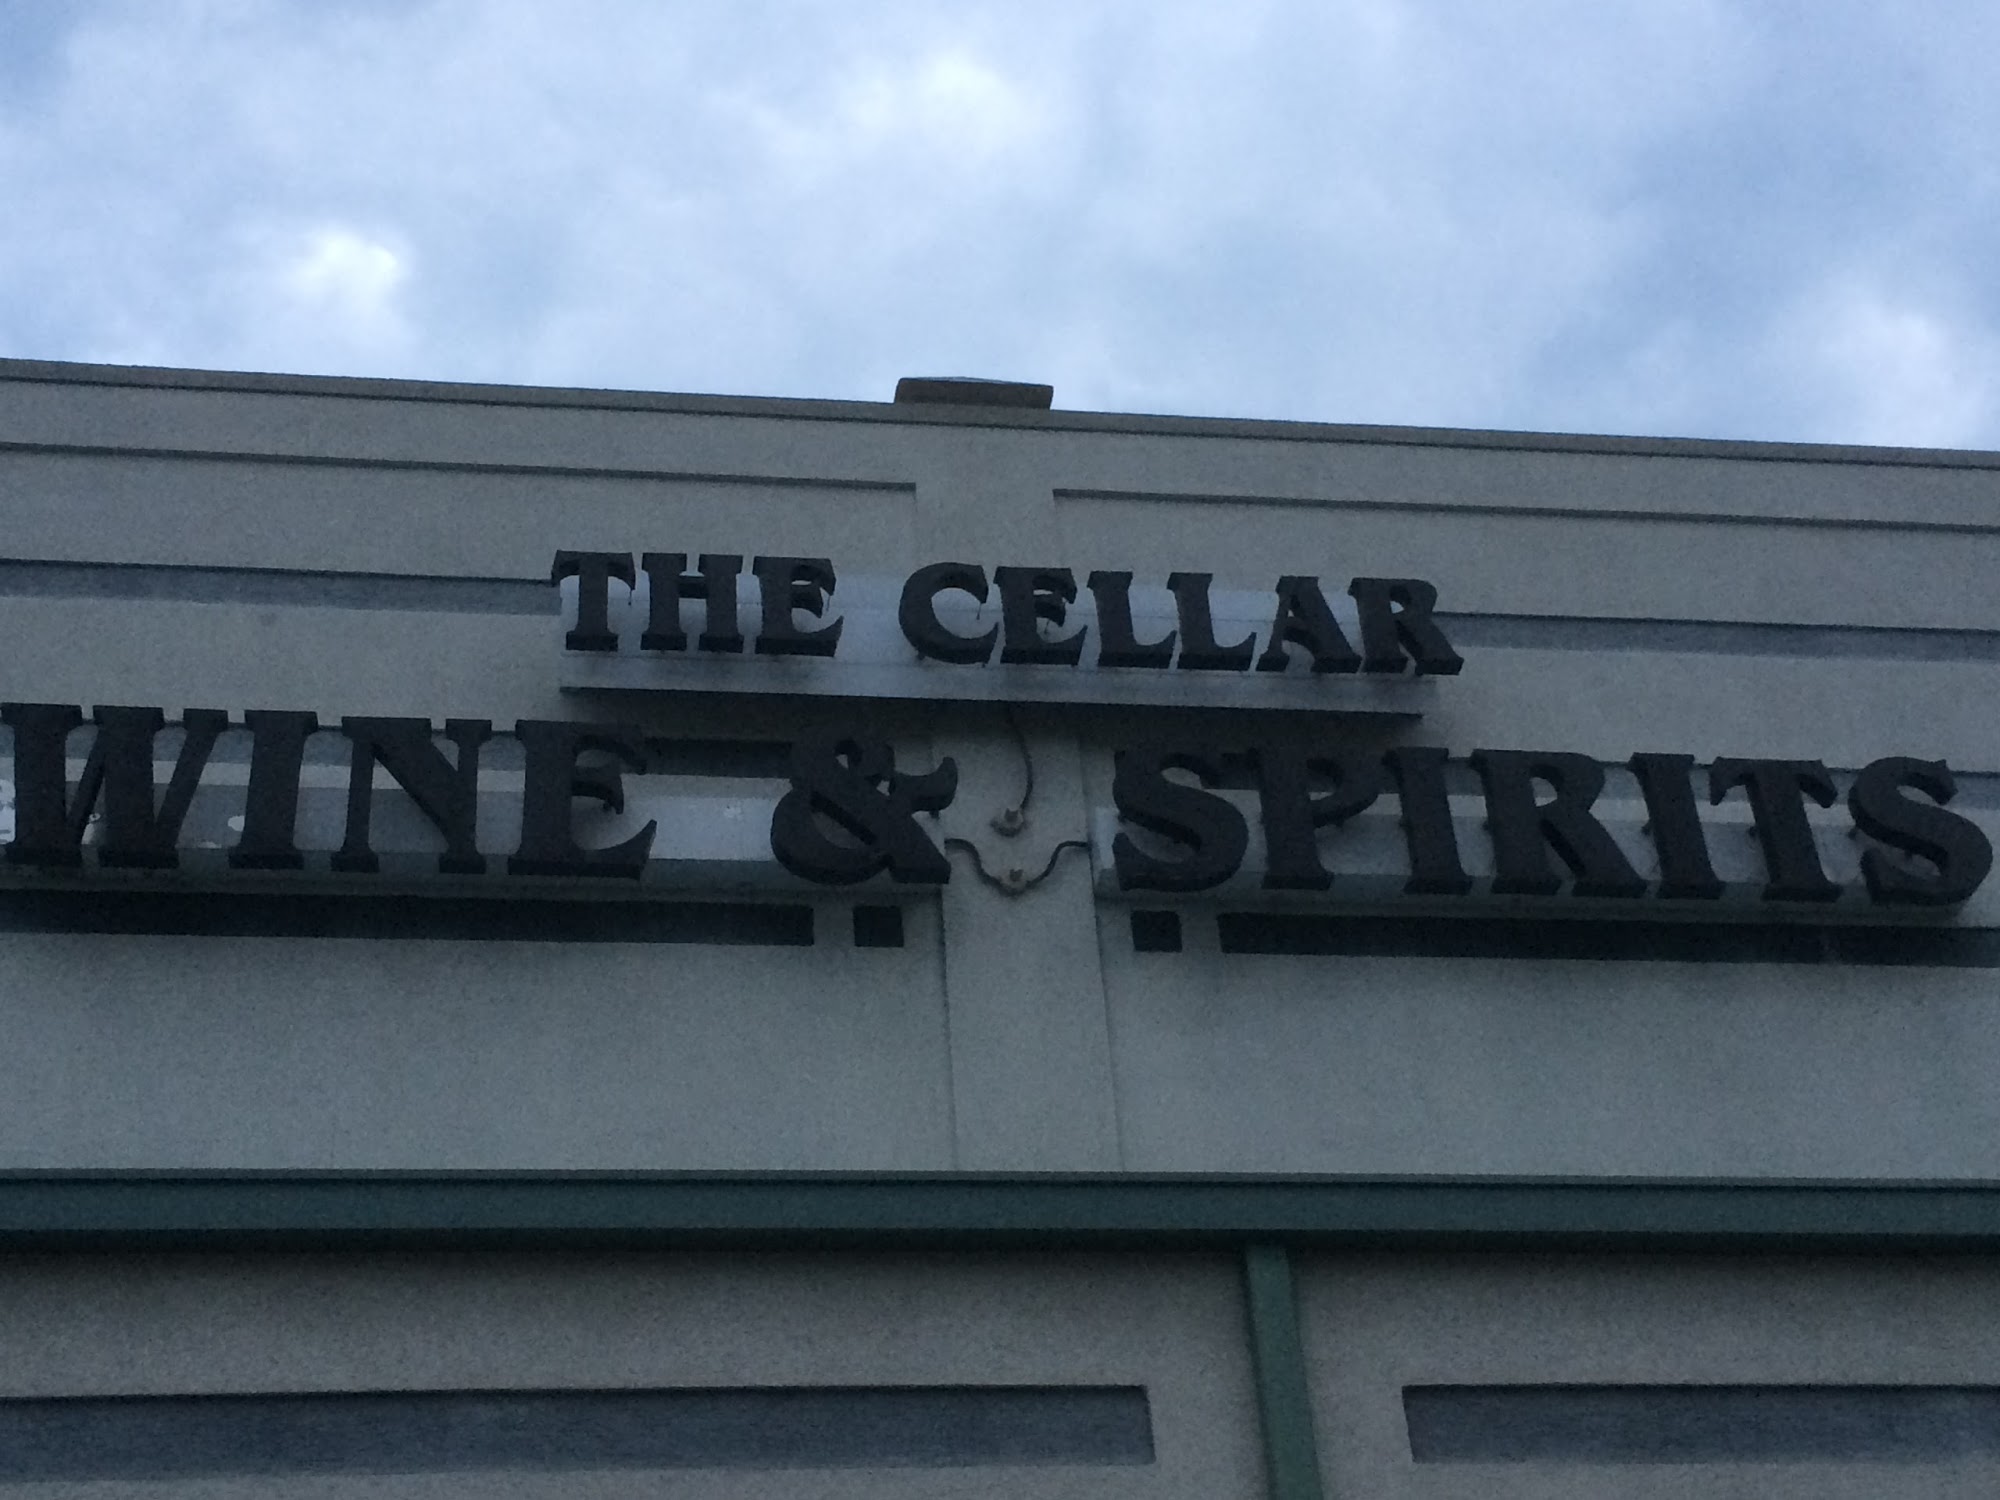 The cellar wine & spirits